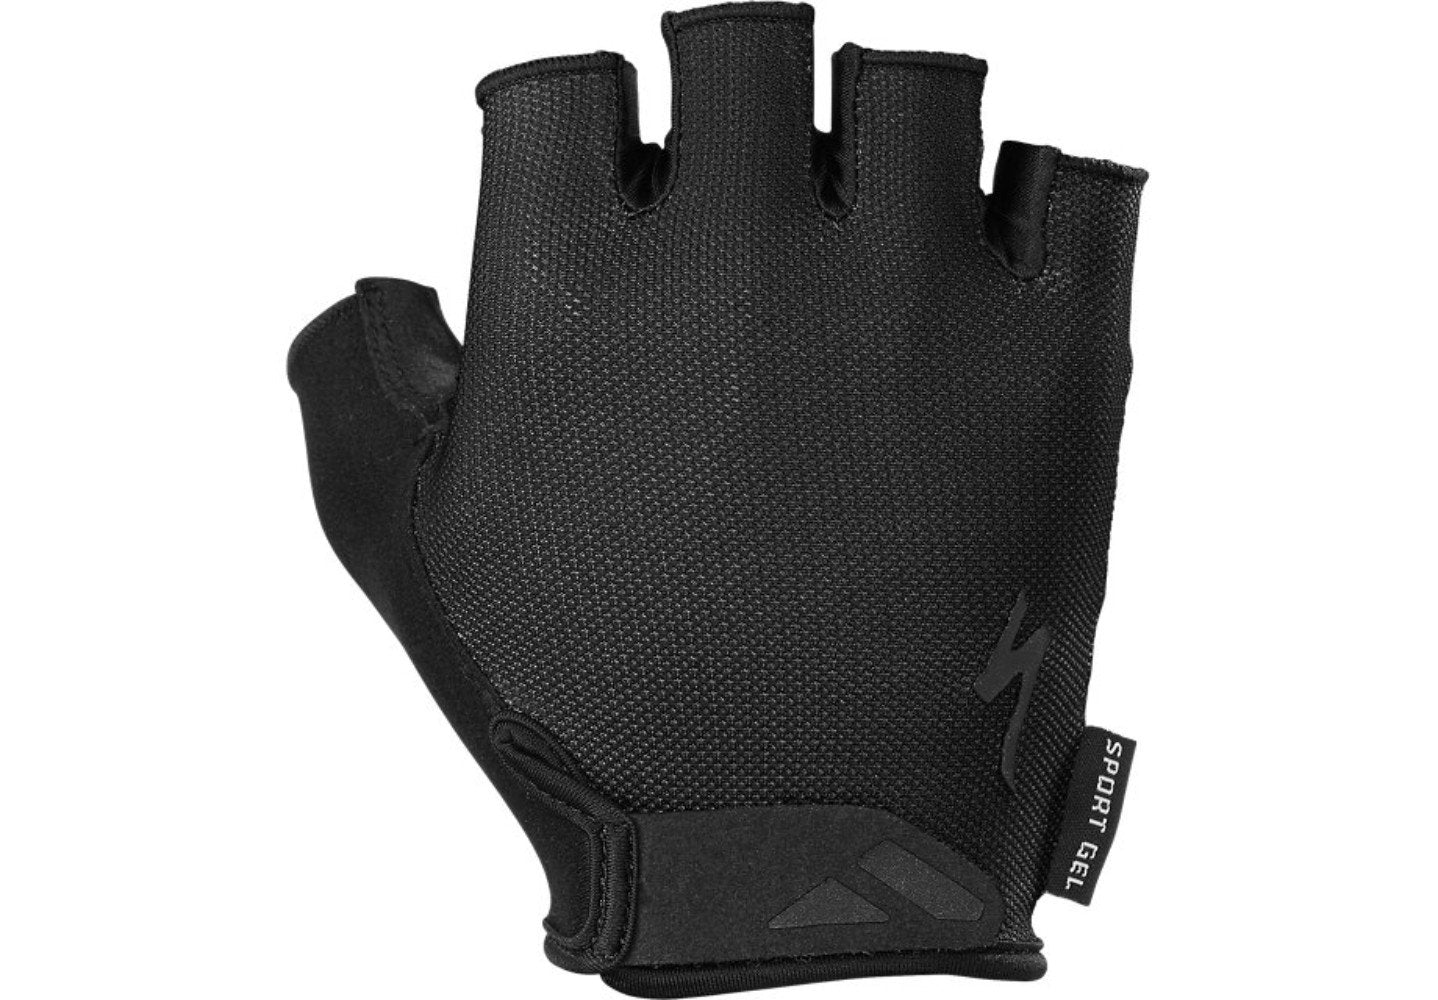 Specialized Body Geometry Sport Gel Cycling Gloves